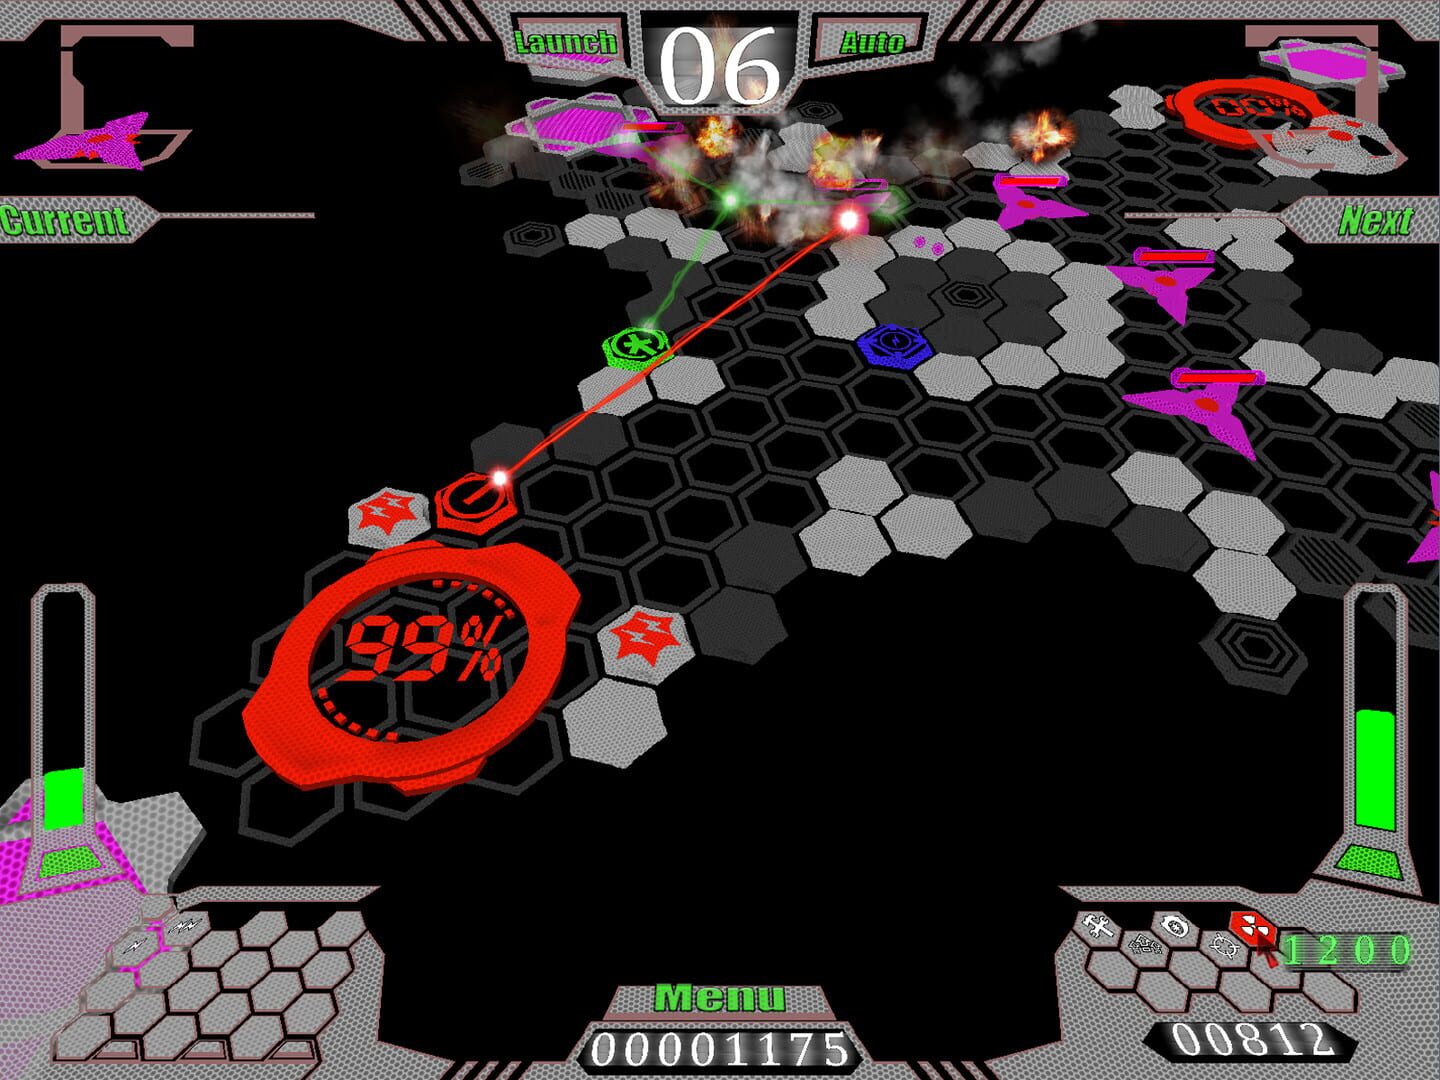 Hexagon Defense screenshot